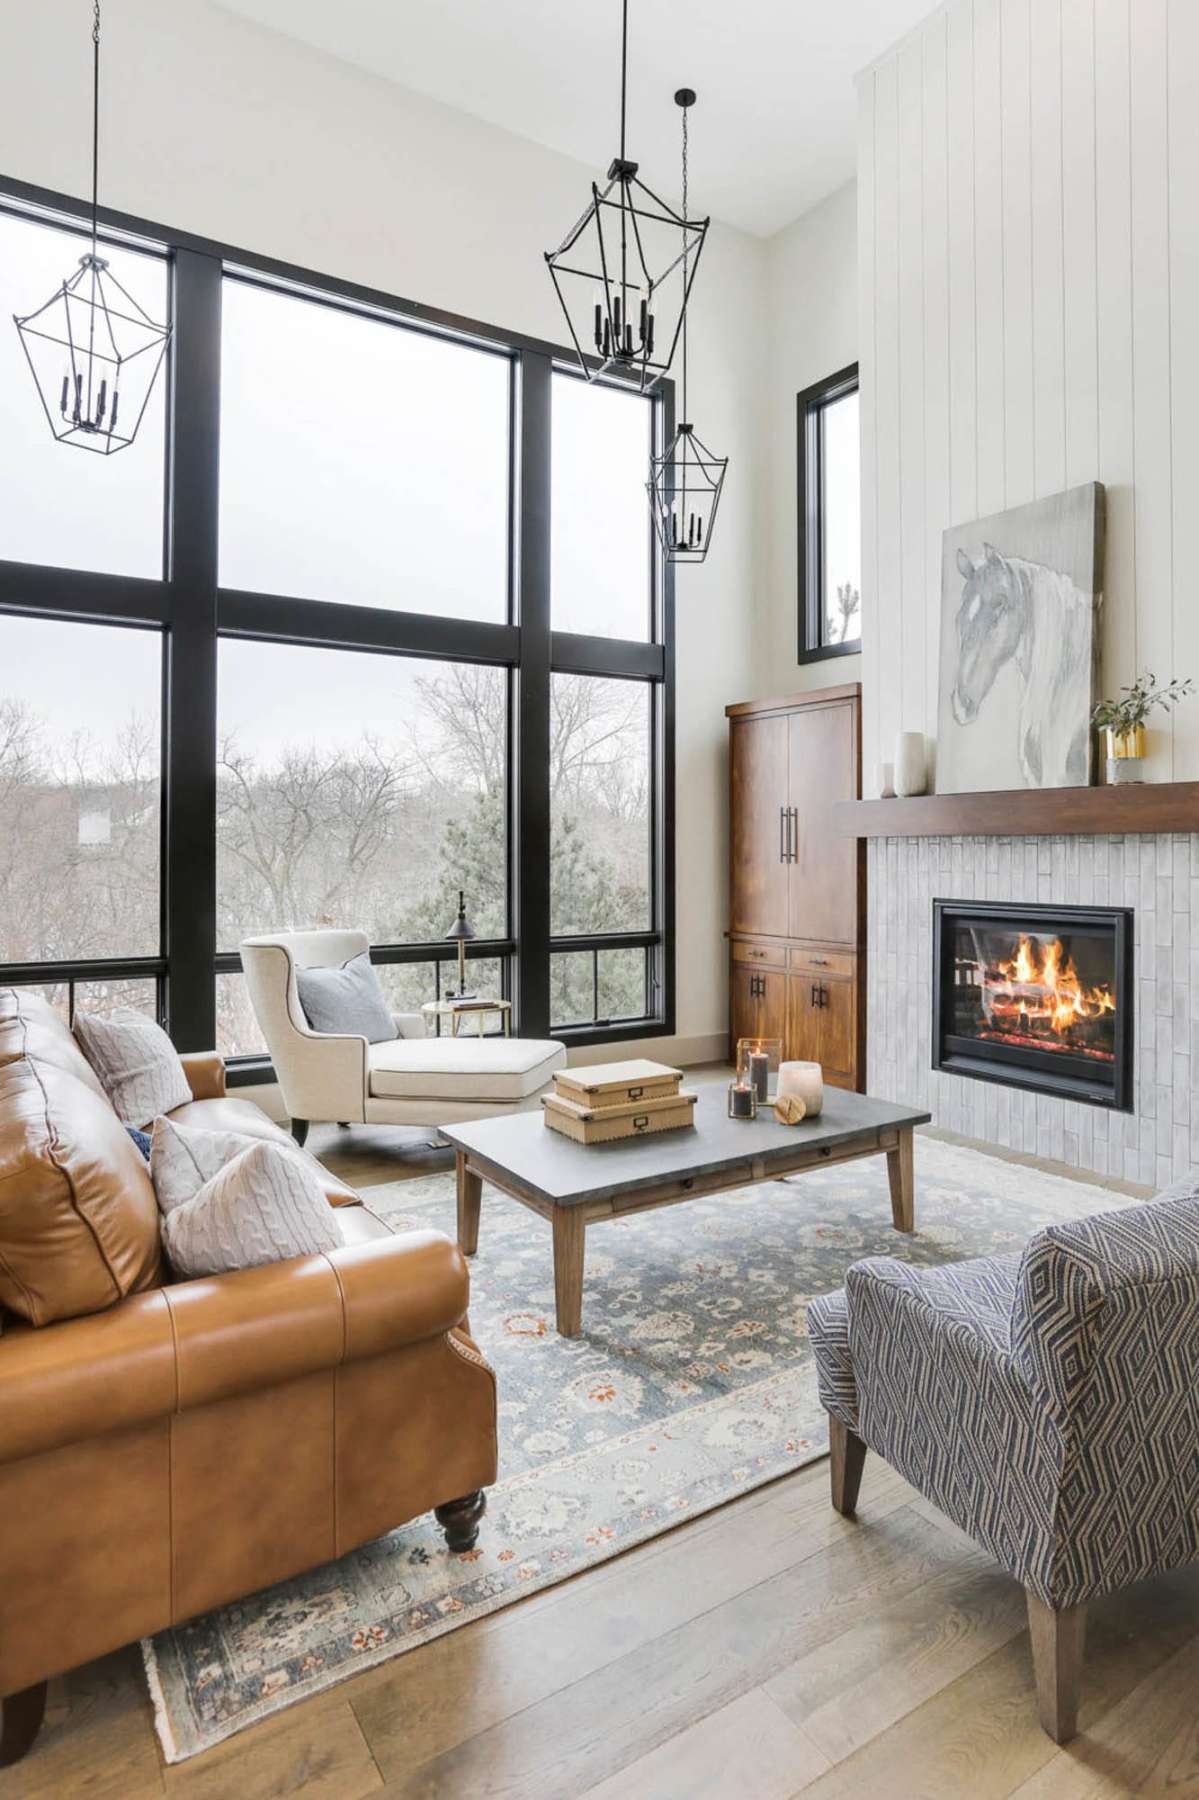 Our Favorite Fireplace Design Ideas - The Tile Shop Blog